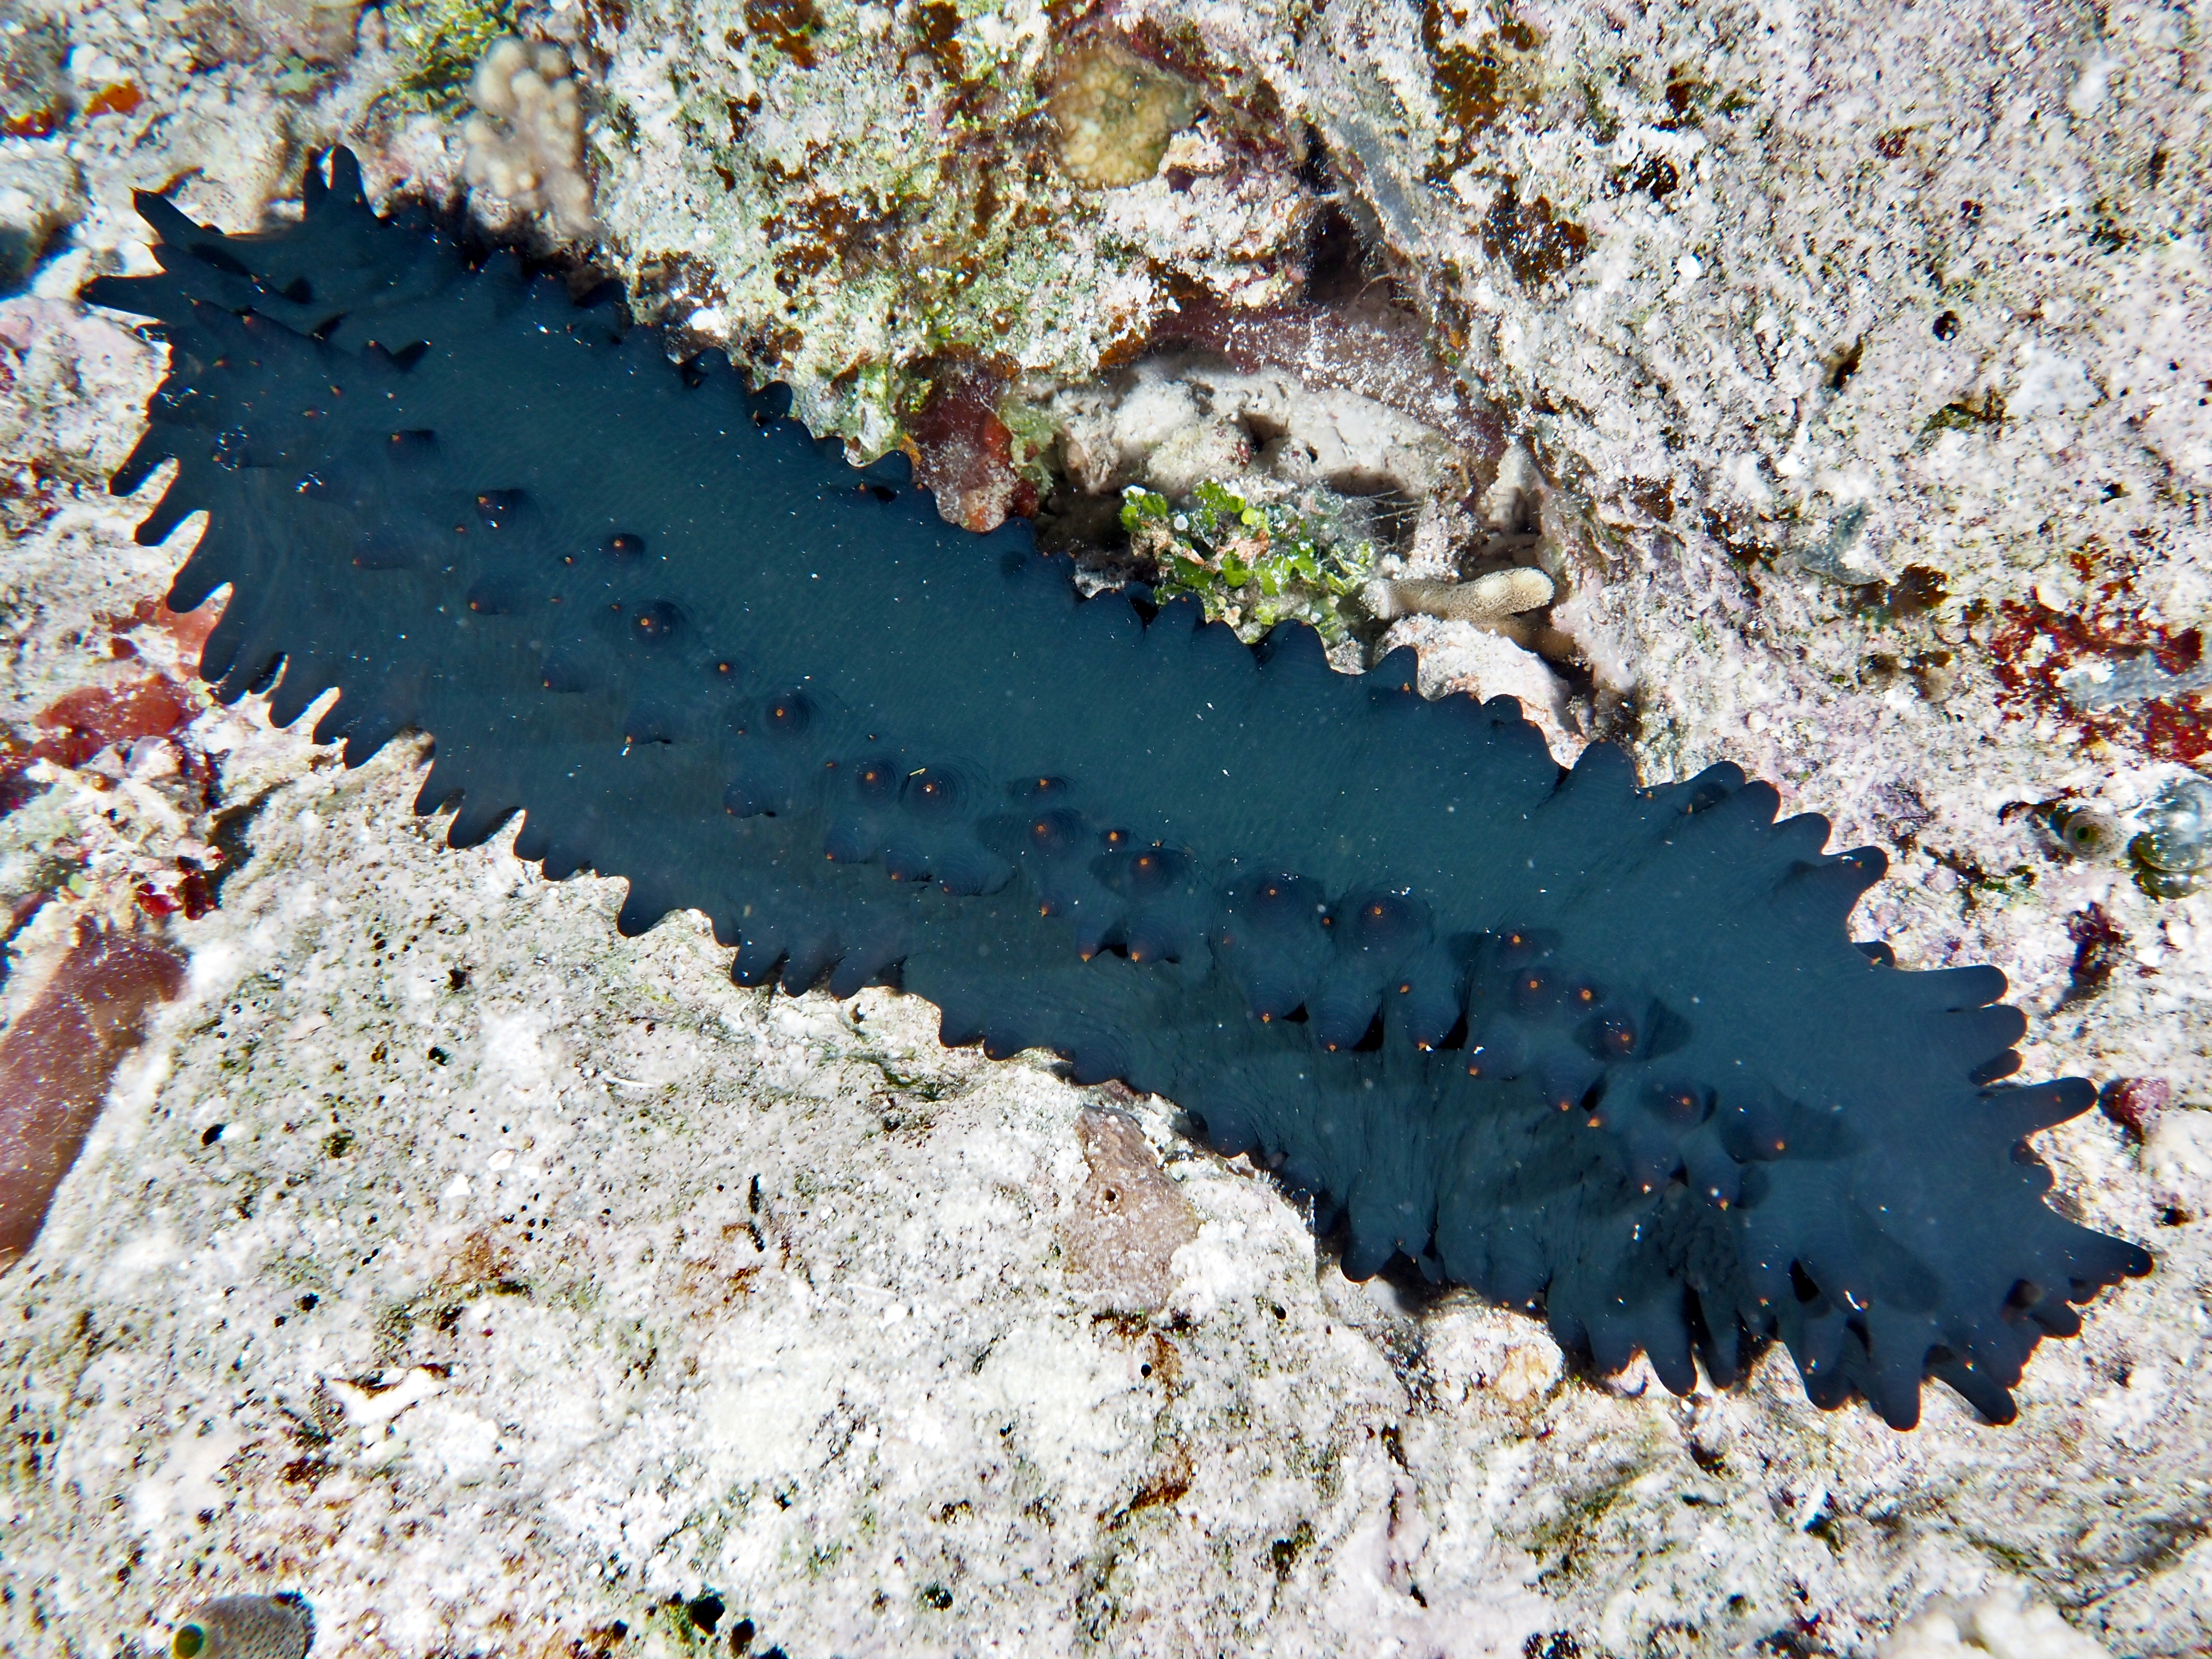 Greenfish Sea Cucumber - Stichopus chloronotus